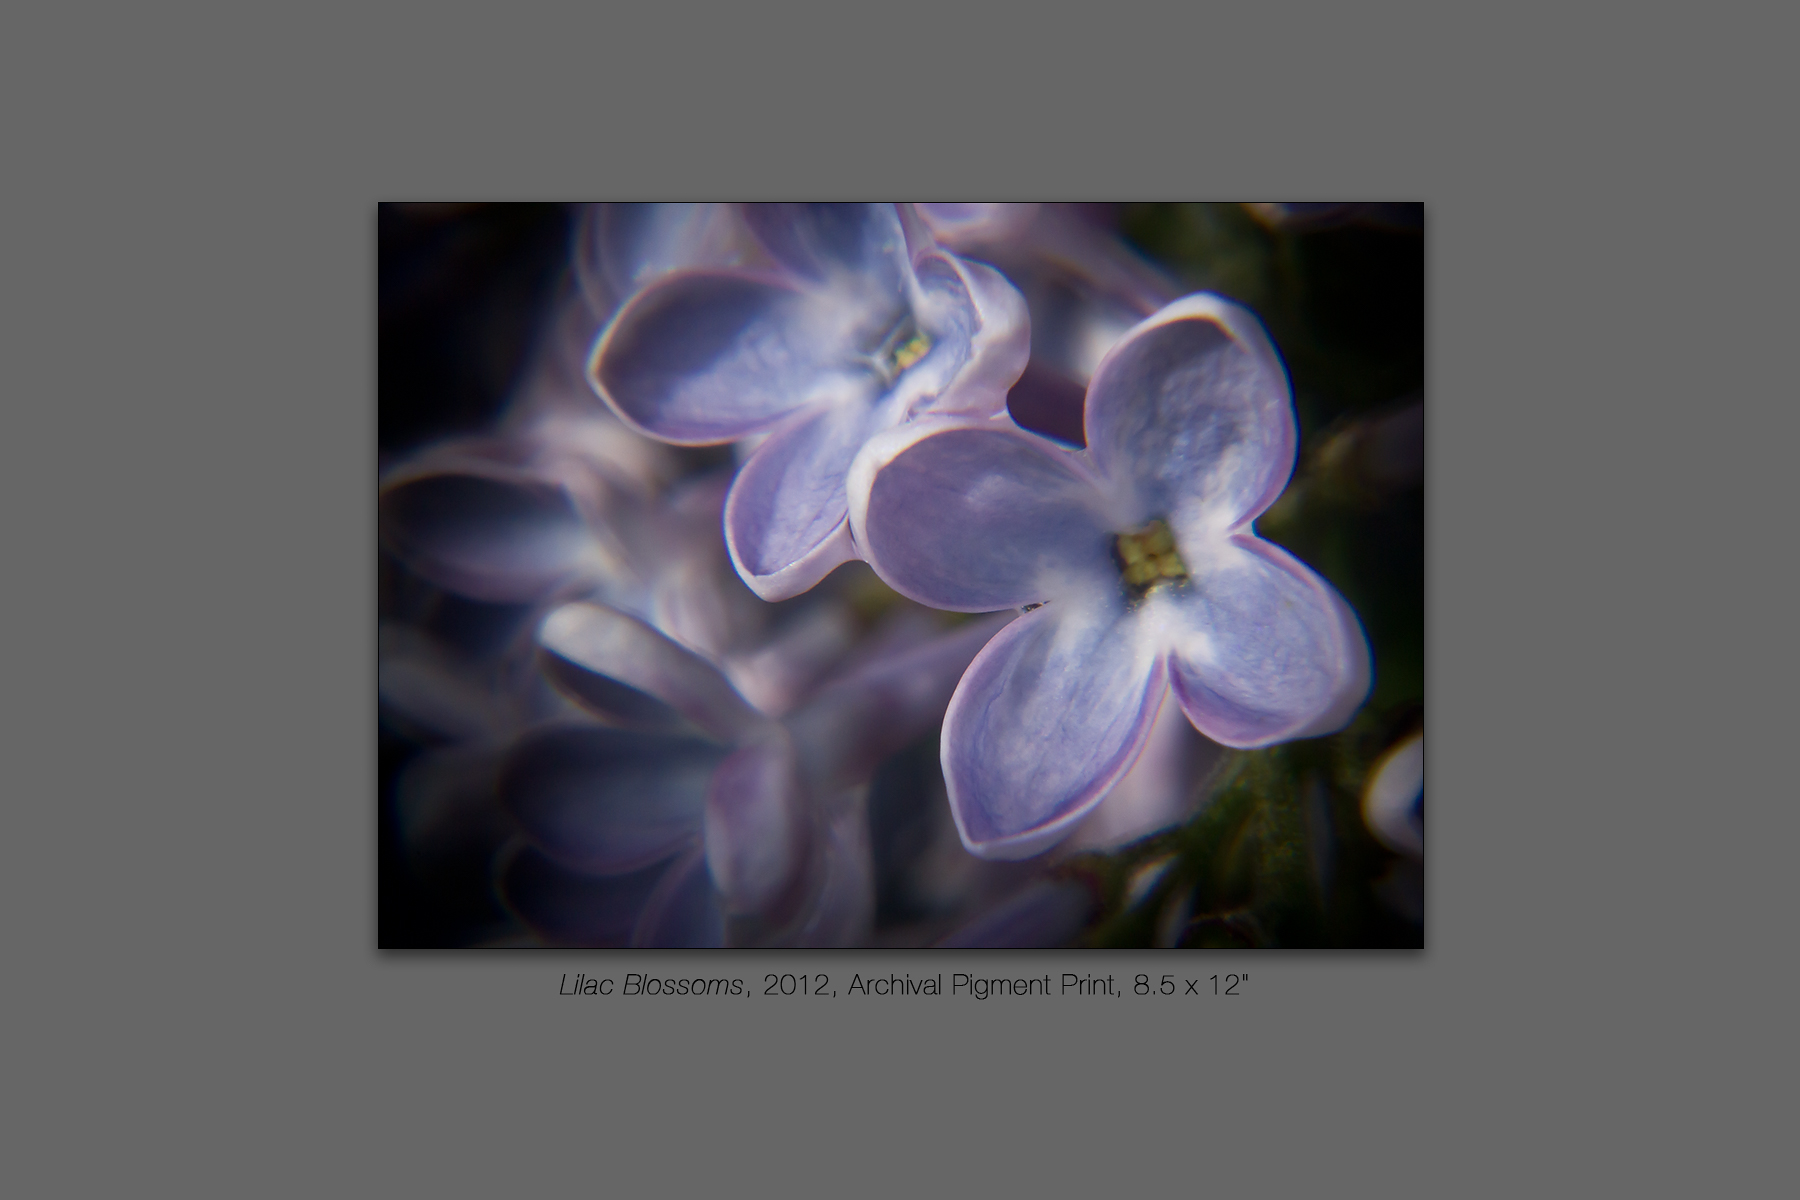 Lilac Blossoms, 2012